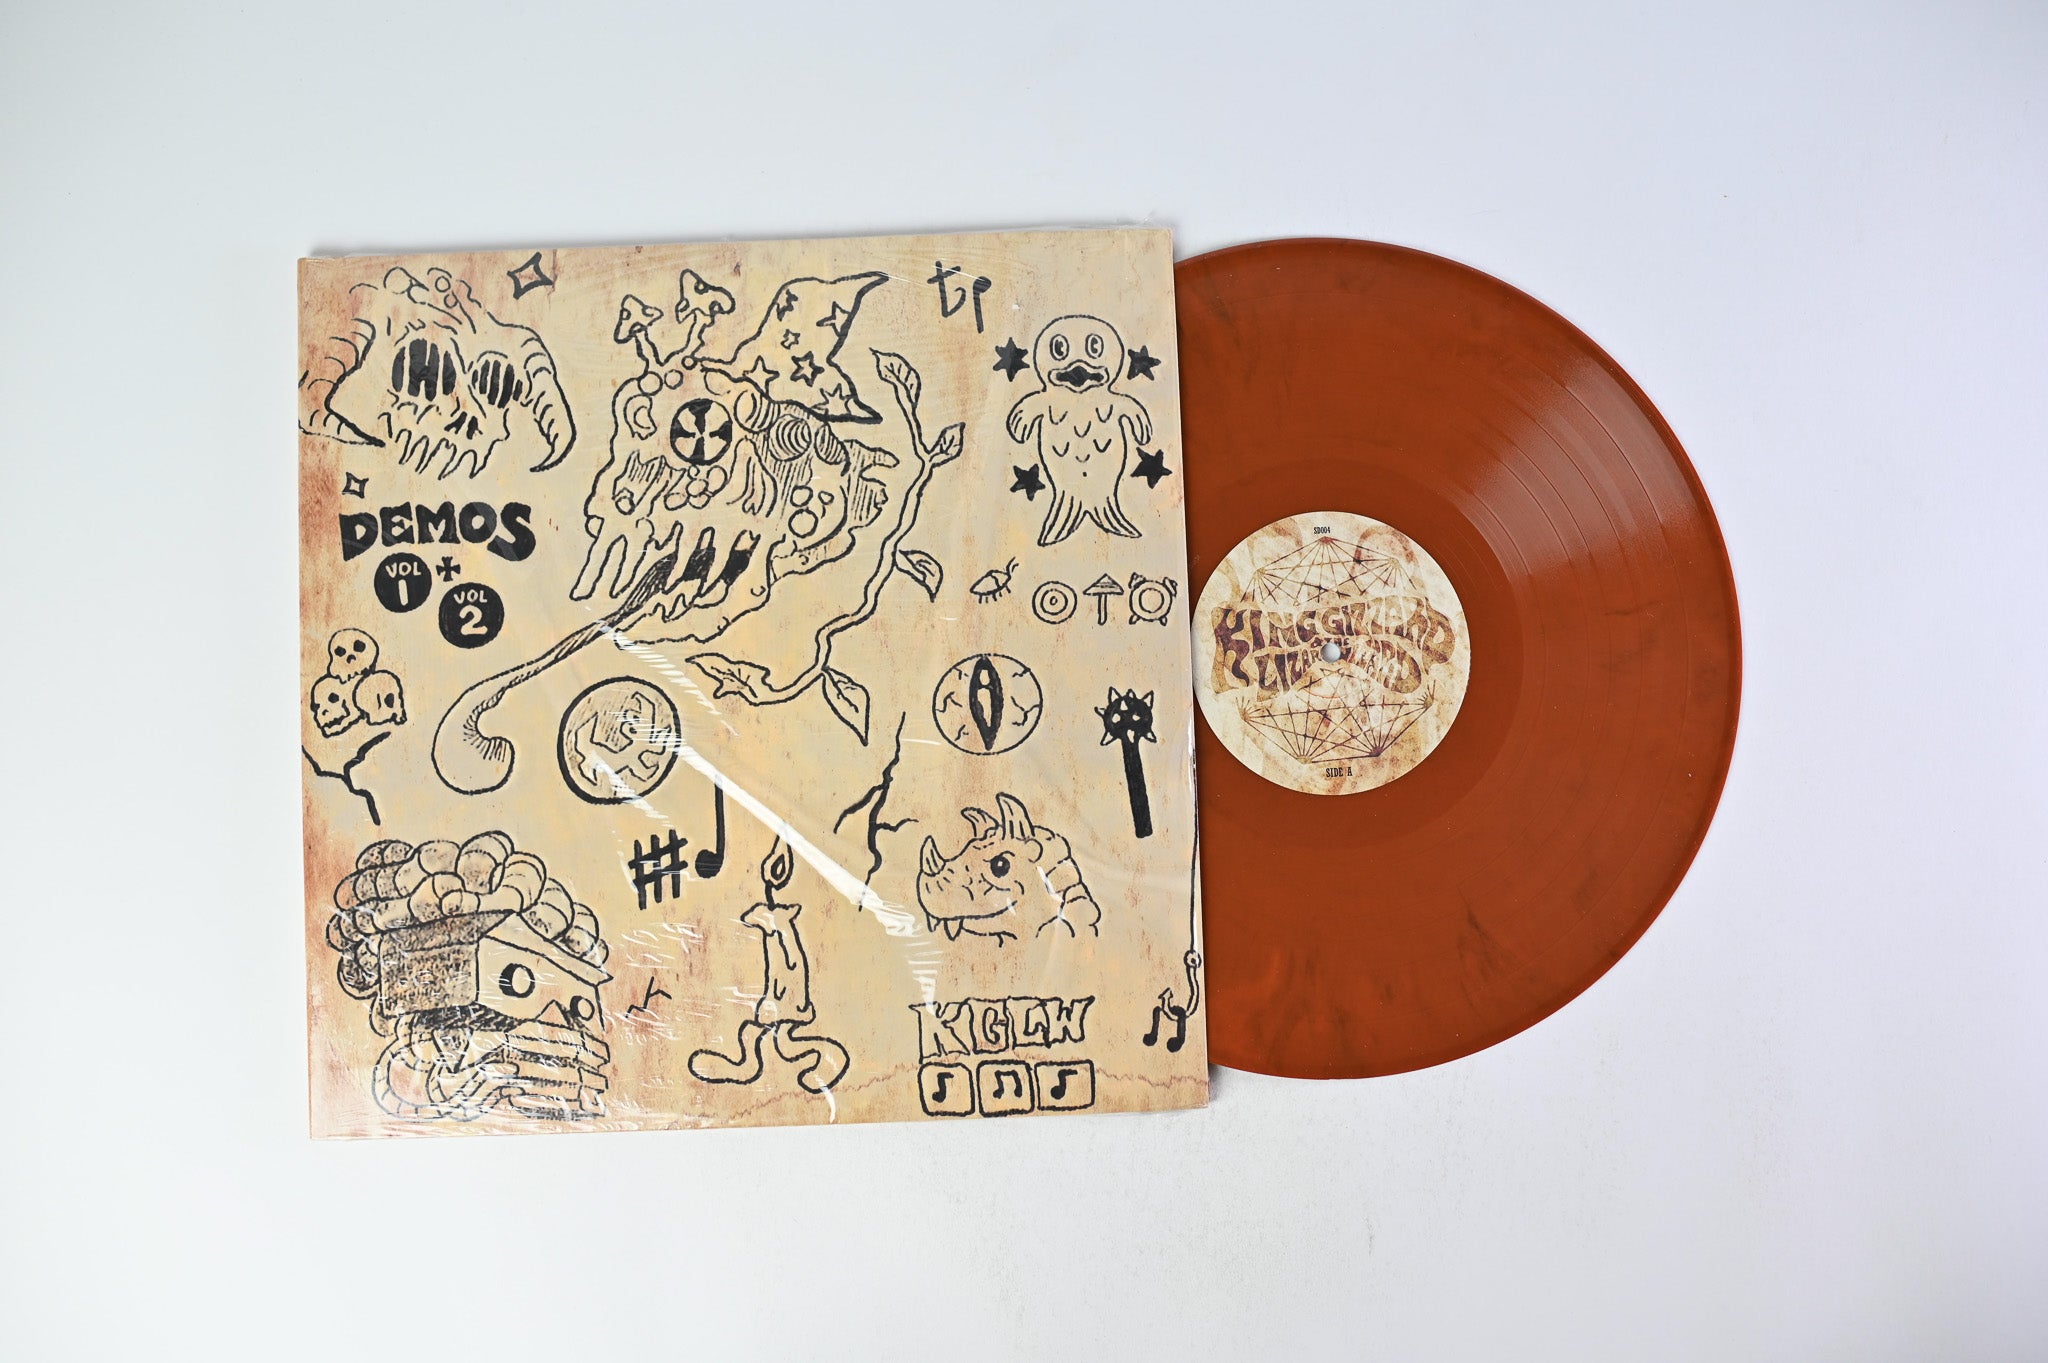 King Gizzard And The Lizard Wizard - Demos Vol. 1 + Vol. 2 on Semlicemente Dischi Numbered Orange Marbled Vinyl